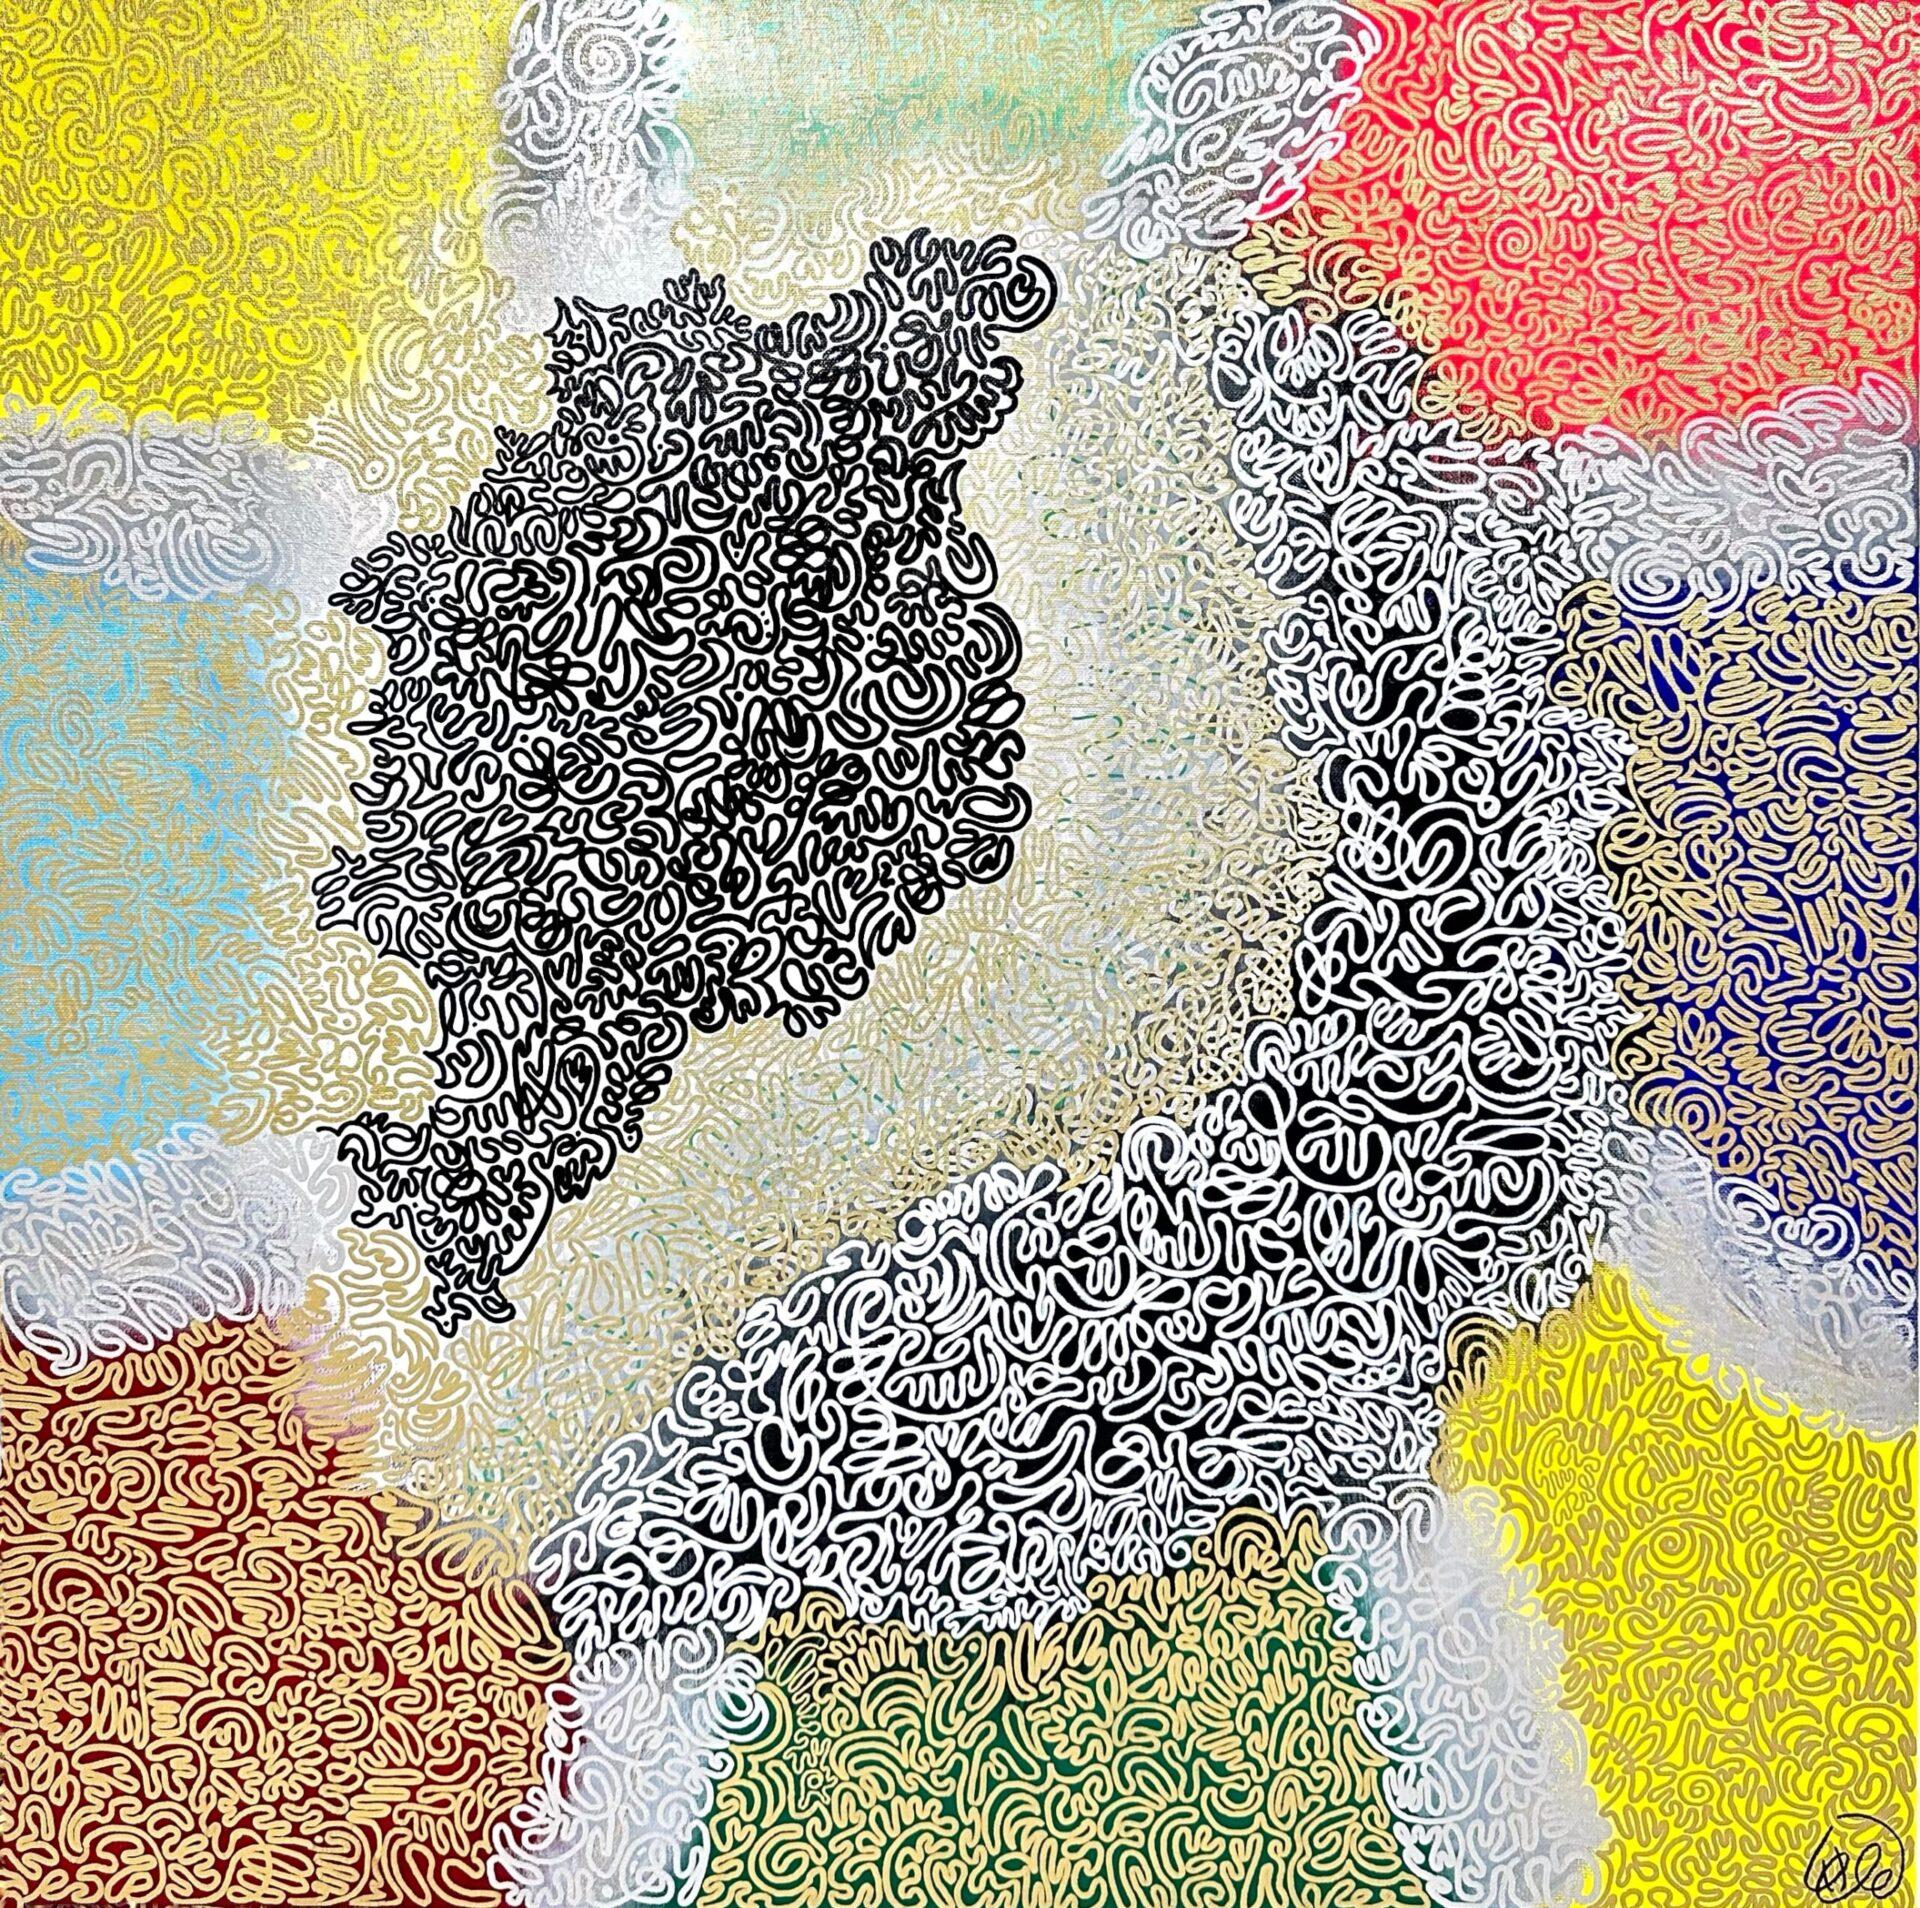 Farbenharmonielehre Ver.2・色彩調和論 Ver.2 – Art von Aki Sakagami